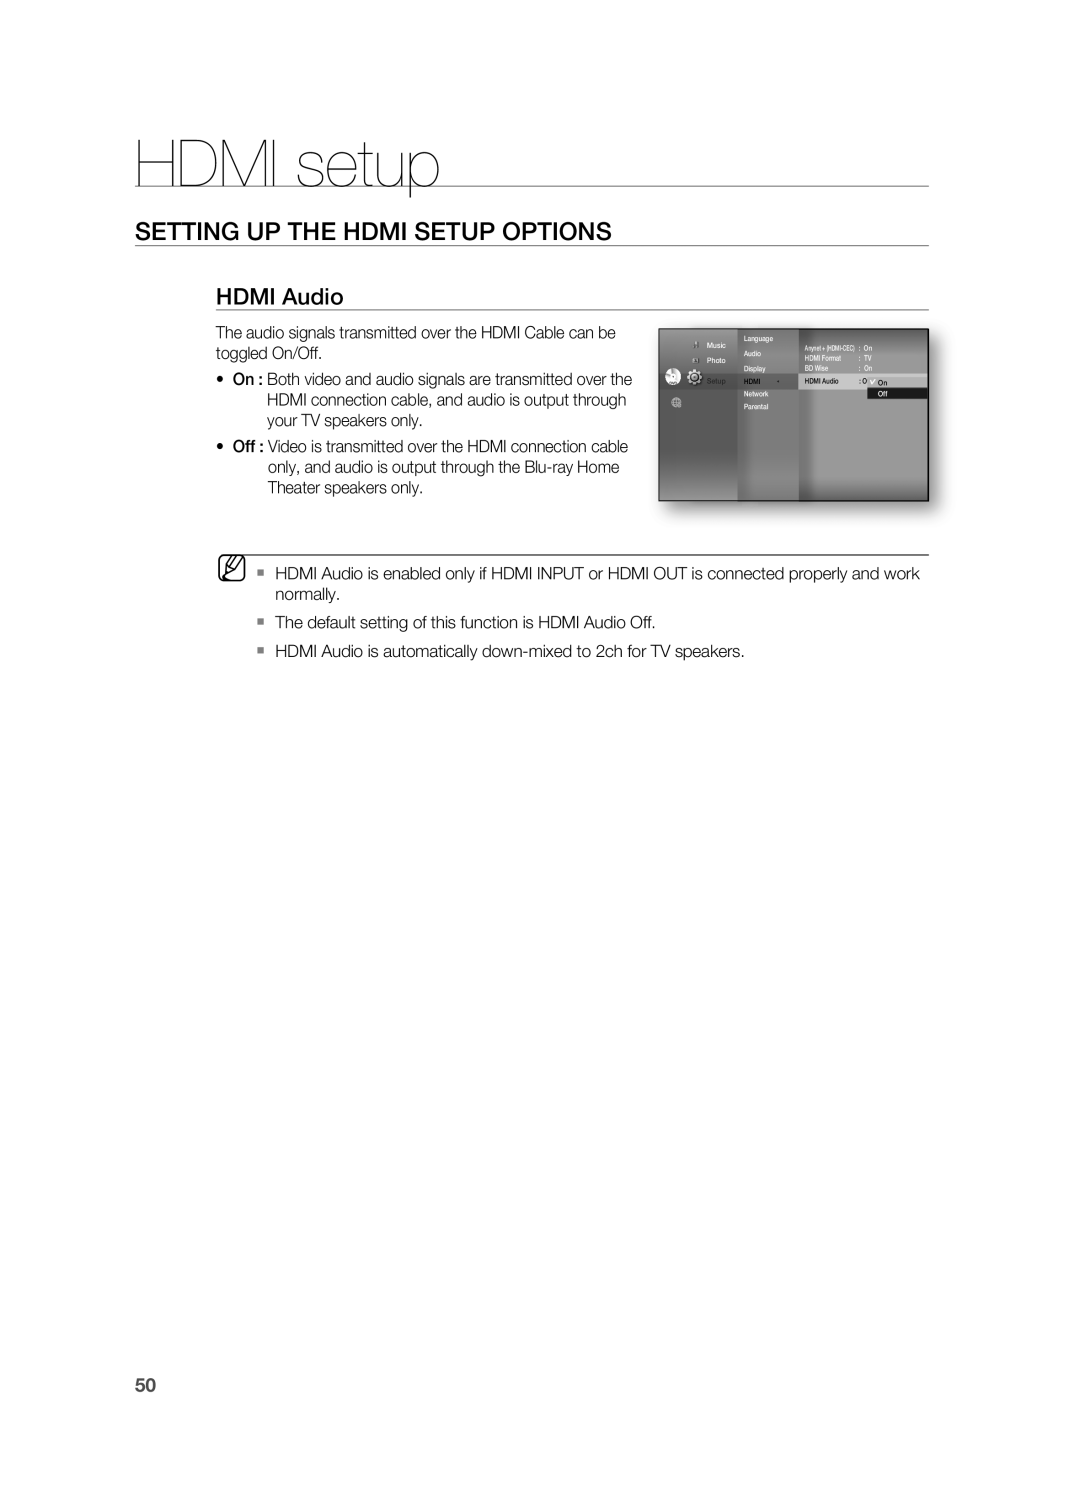 Samsung HT-BD3252 user manual HDMI Audio, HDMI setup, Setting Up The Hdmi Setup Options 